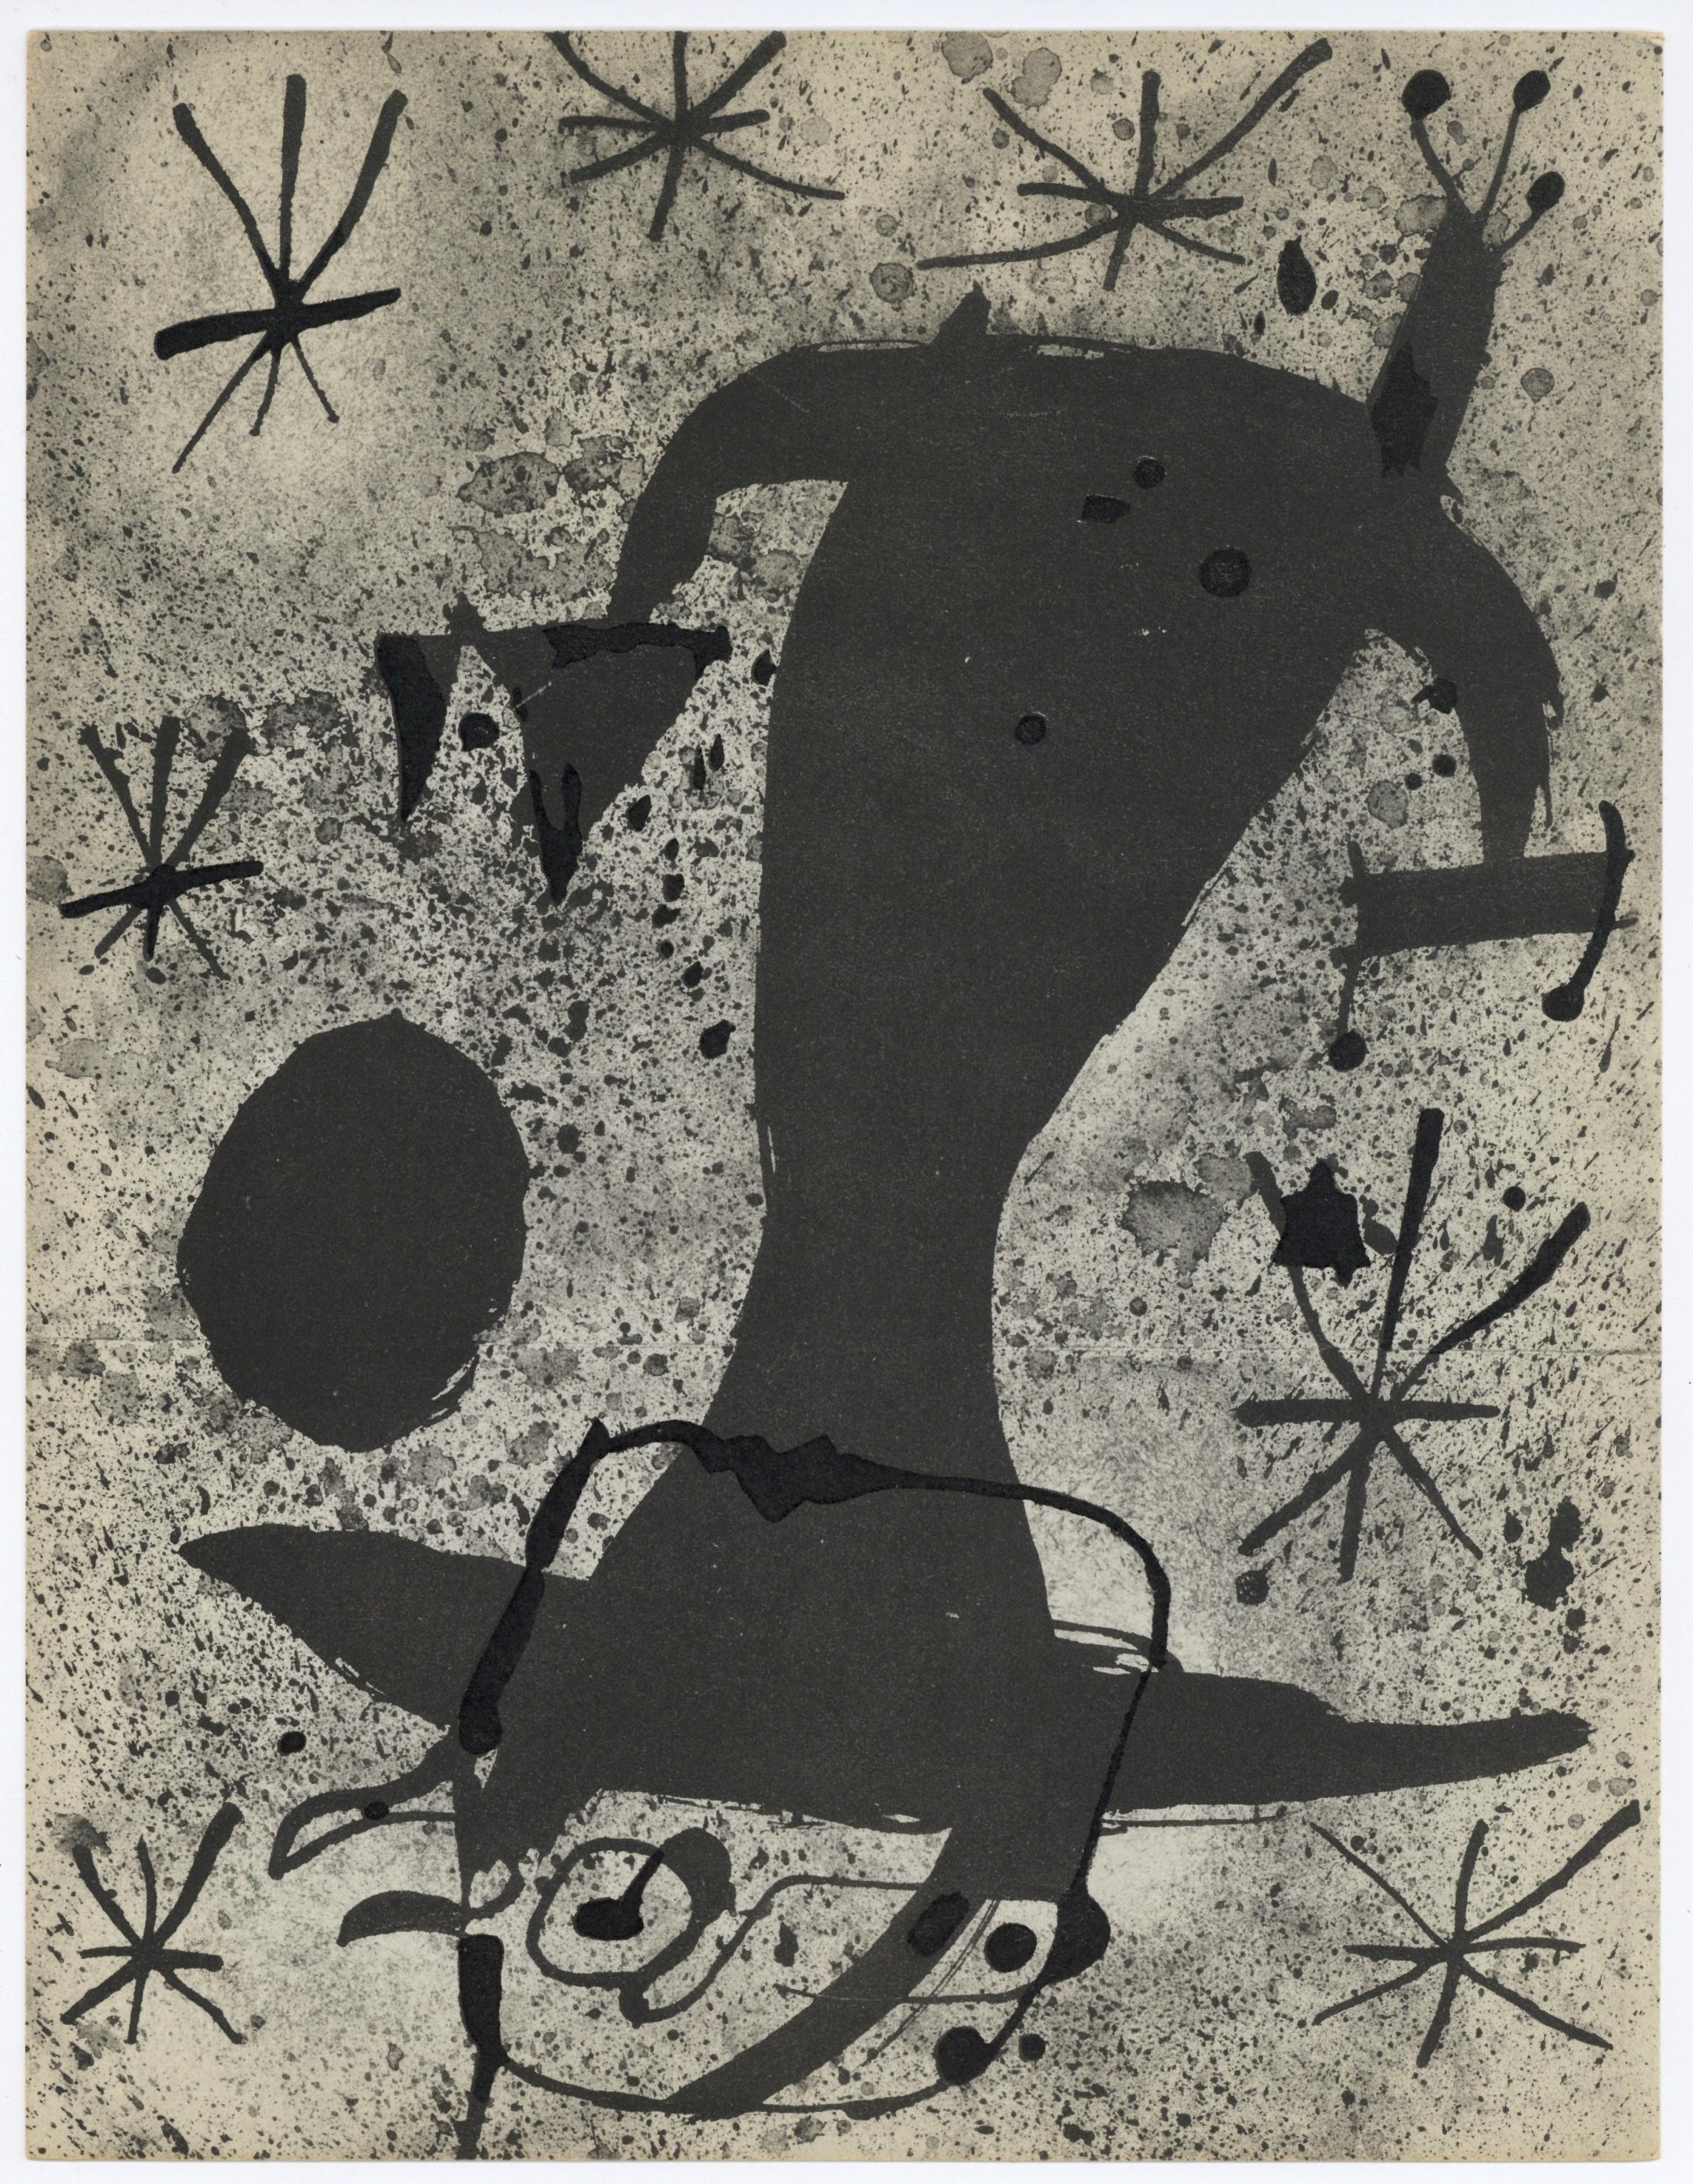 pochoir - Print by (after) Joan Miró